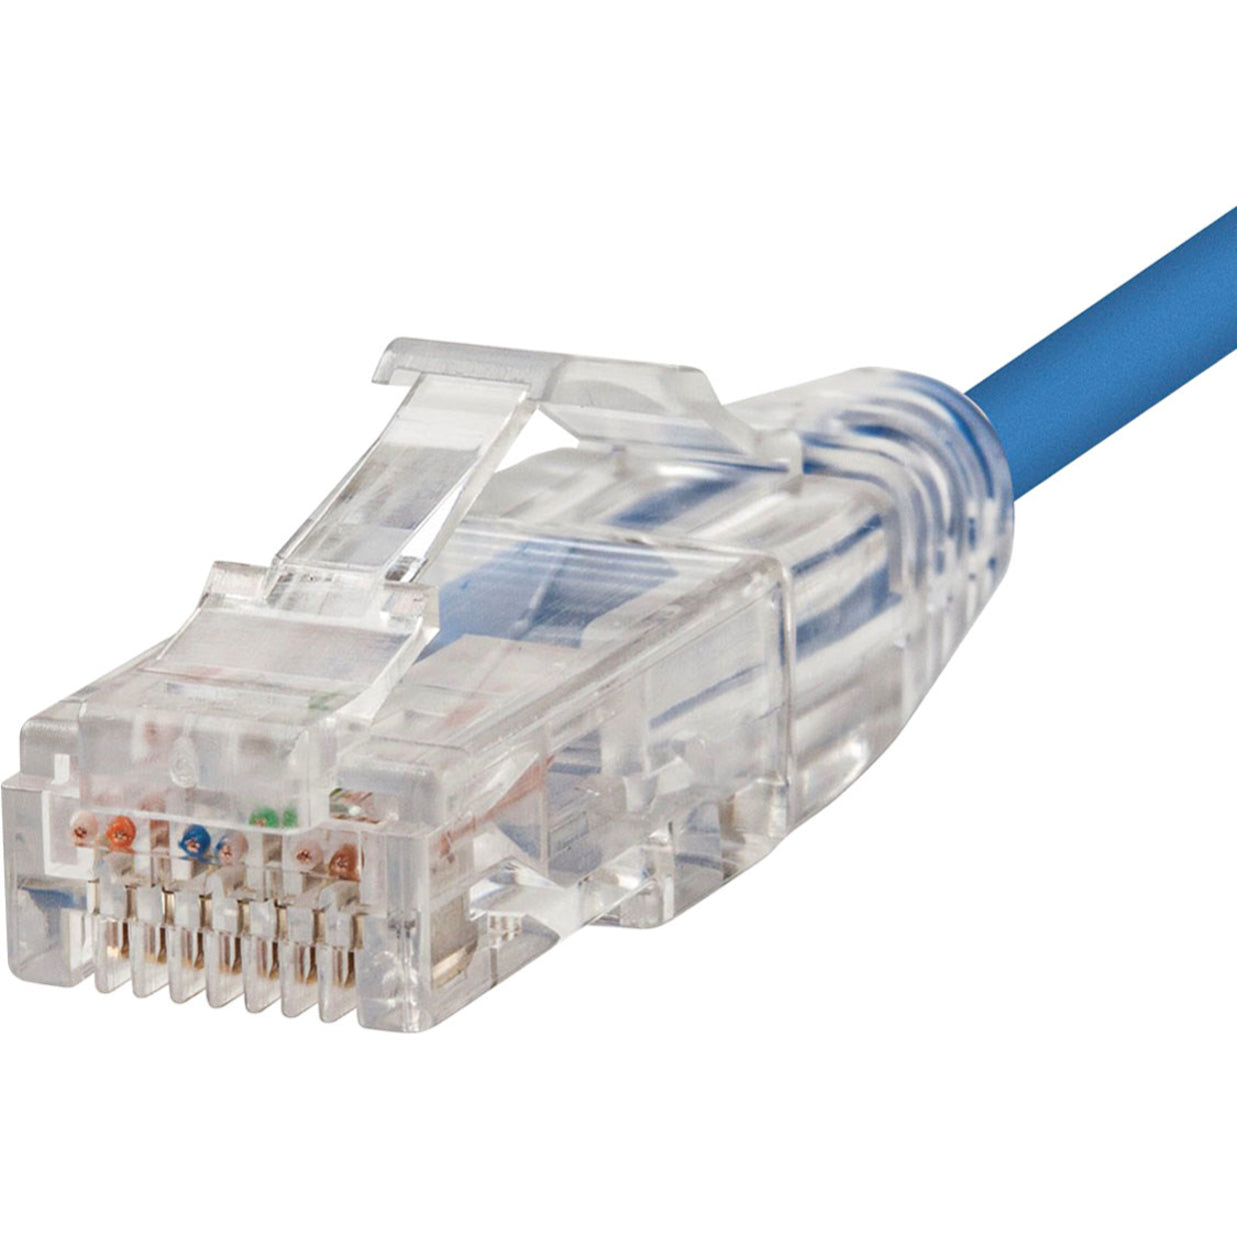 Monoprice 13518 SlimRun Cat6 28AWG UTP Ethernet Network Cable, 1ft Blue, Flexible, Snagless